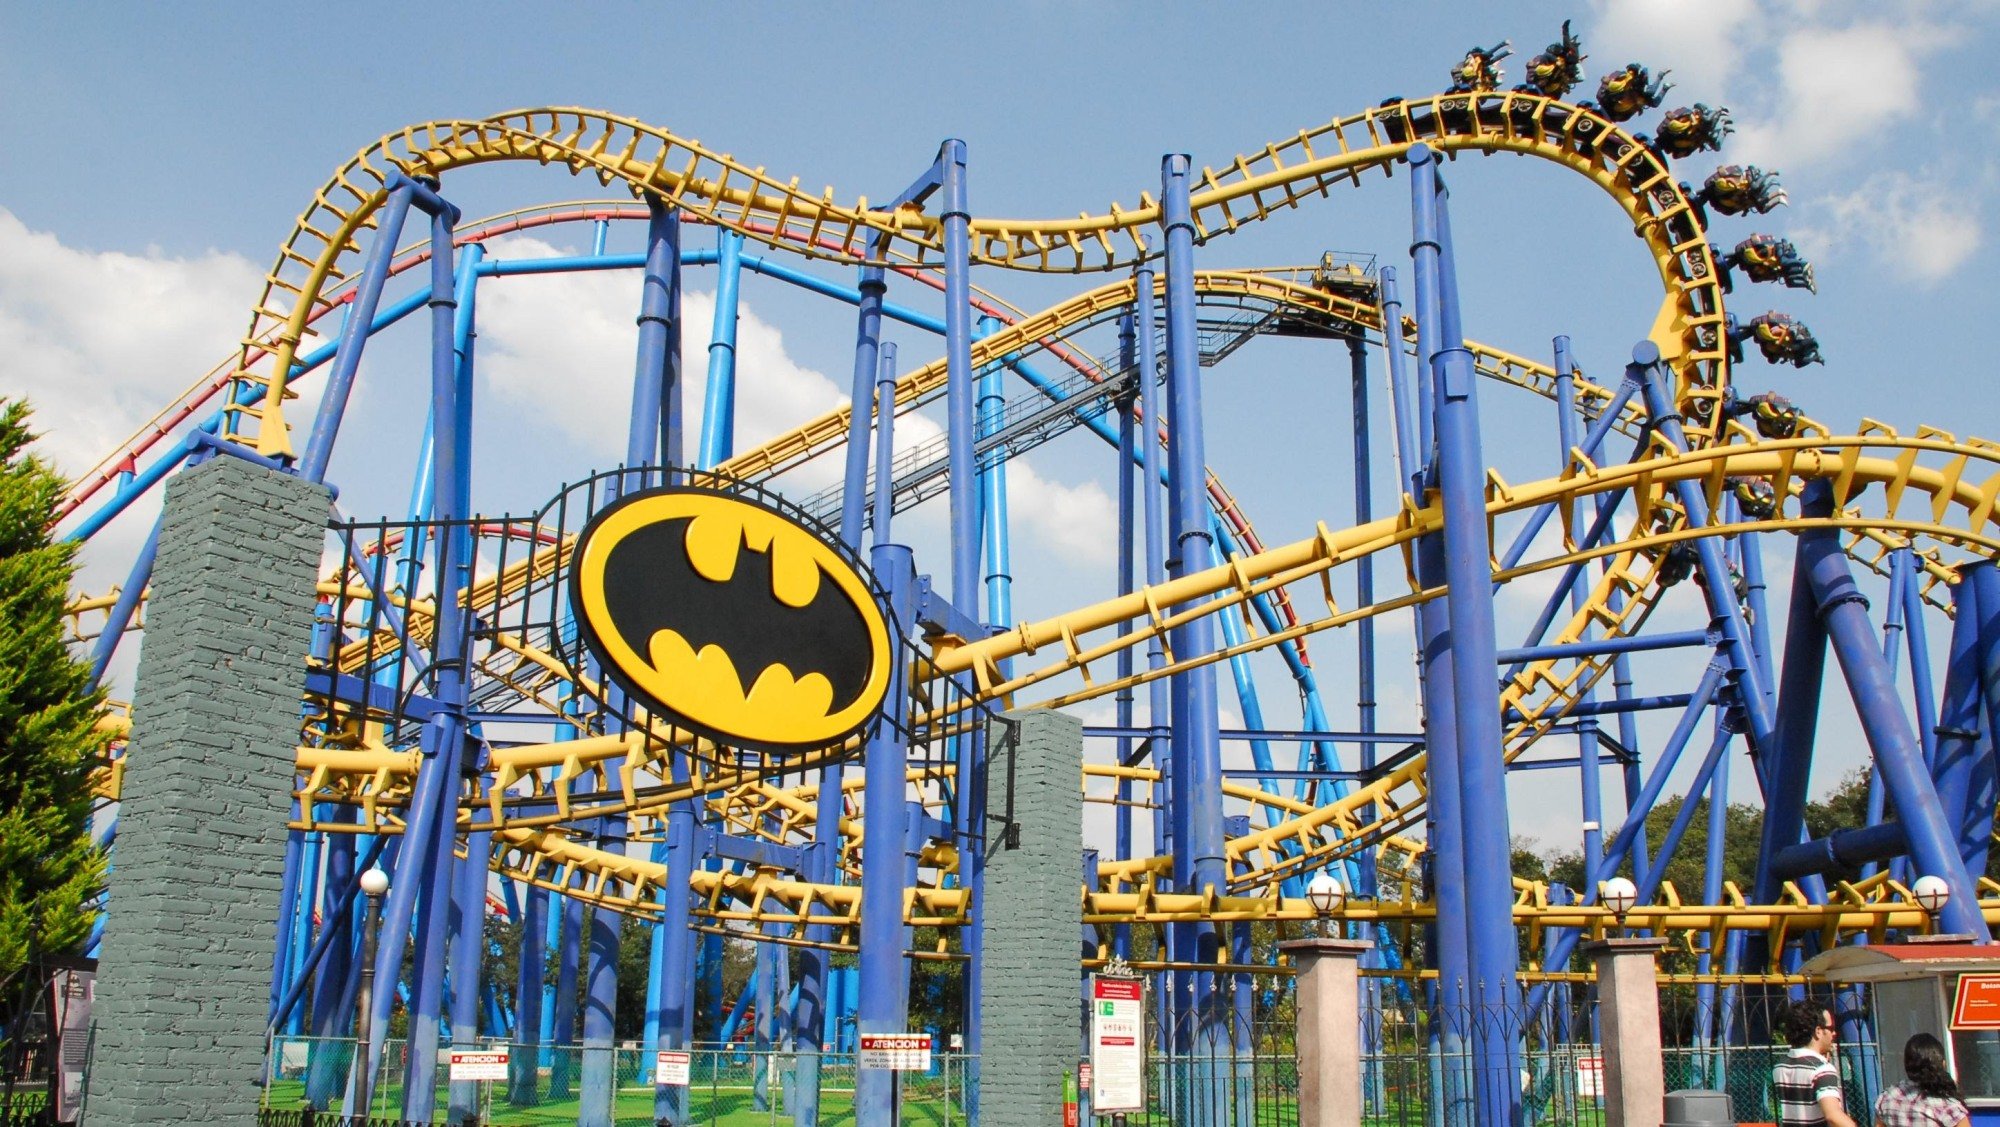 Batman The Ride en Six Flags Mexico: Opiniones e Info | PACommunity